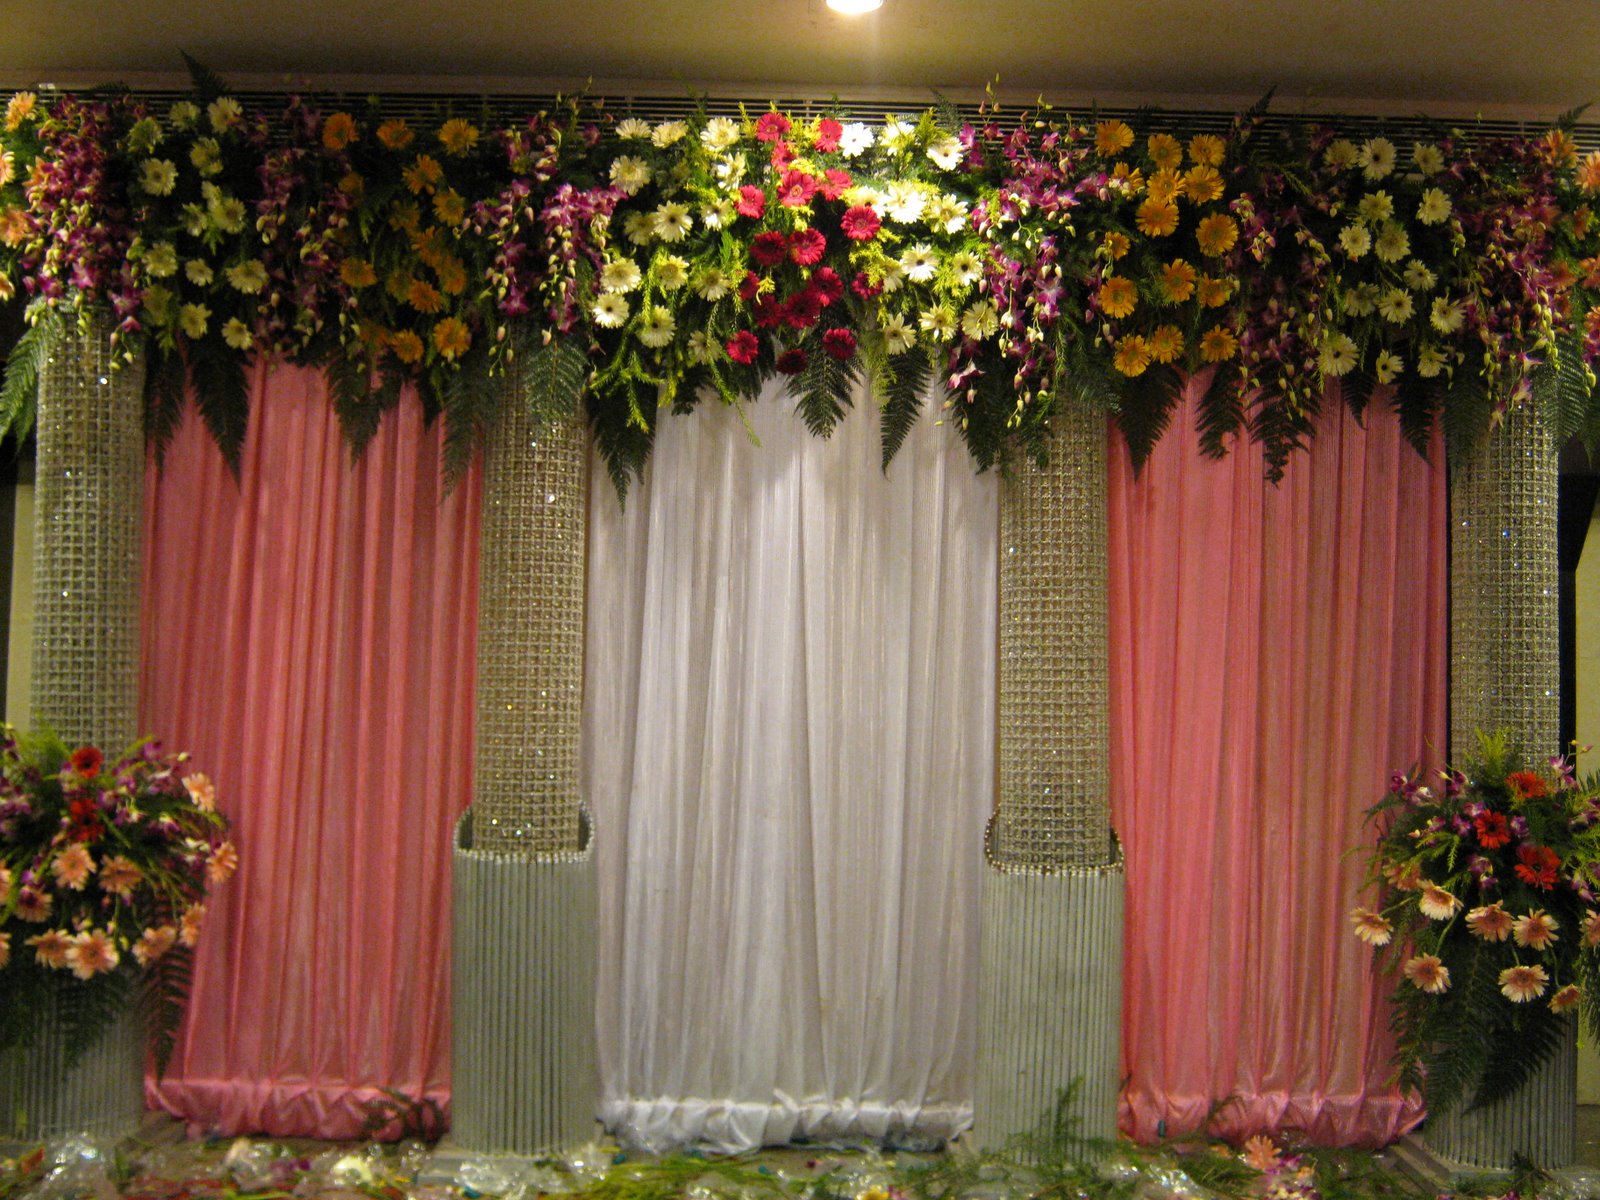 bengali wedding decoration